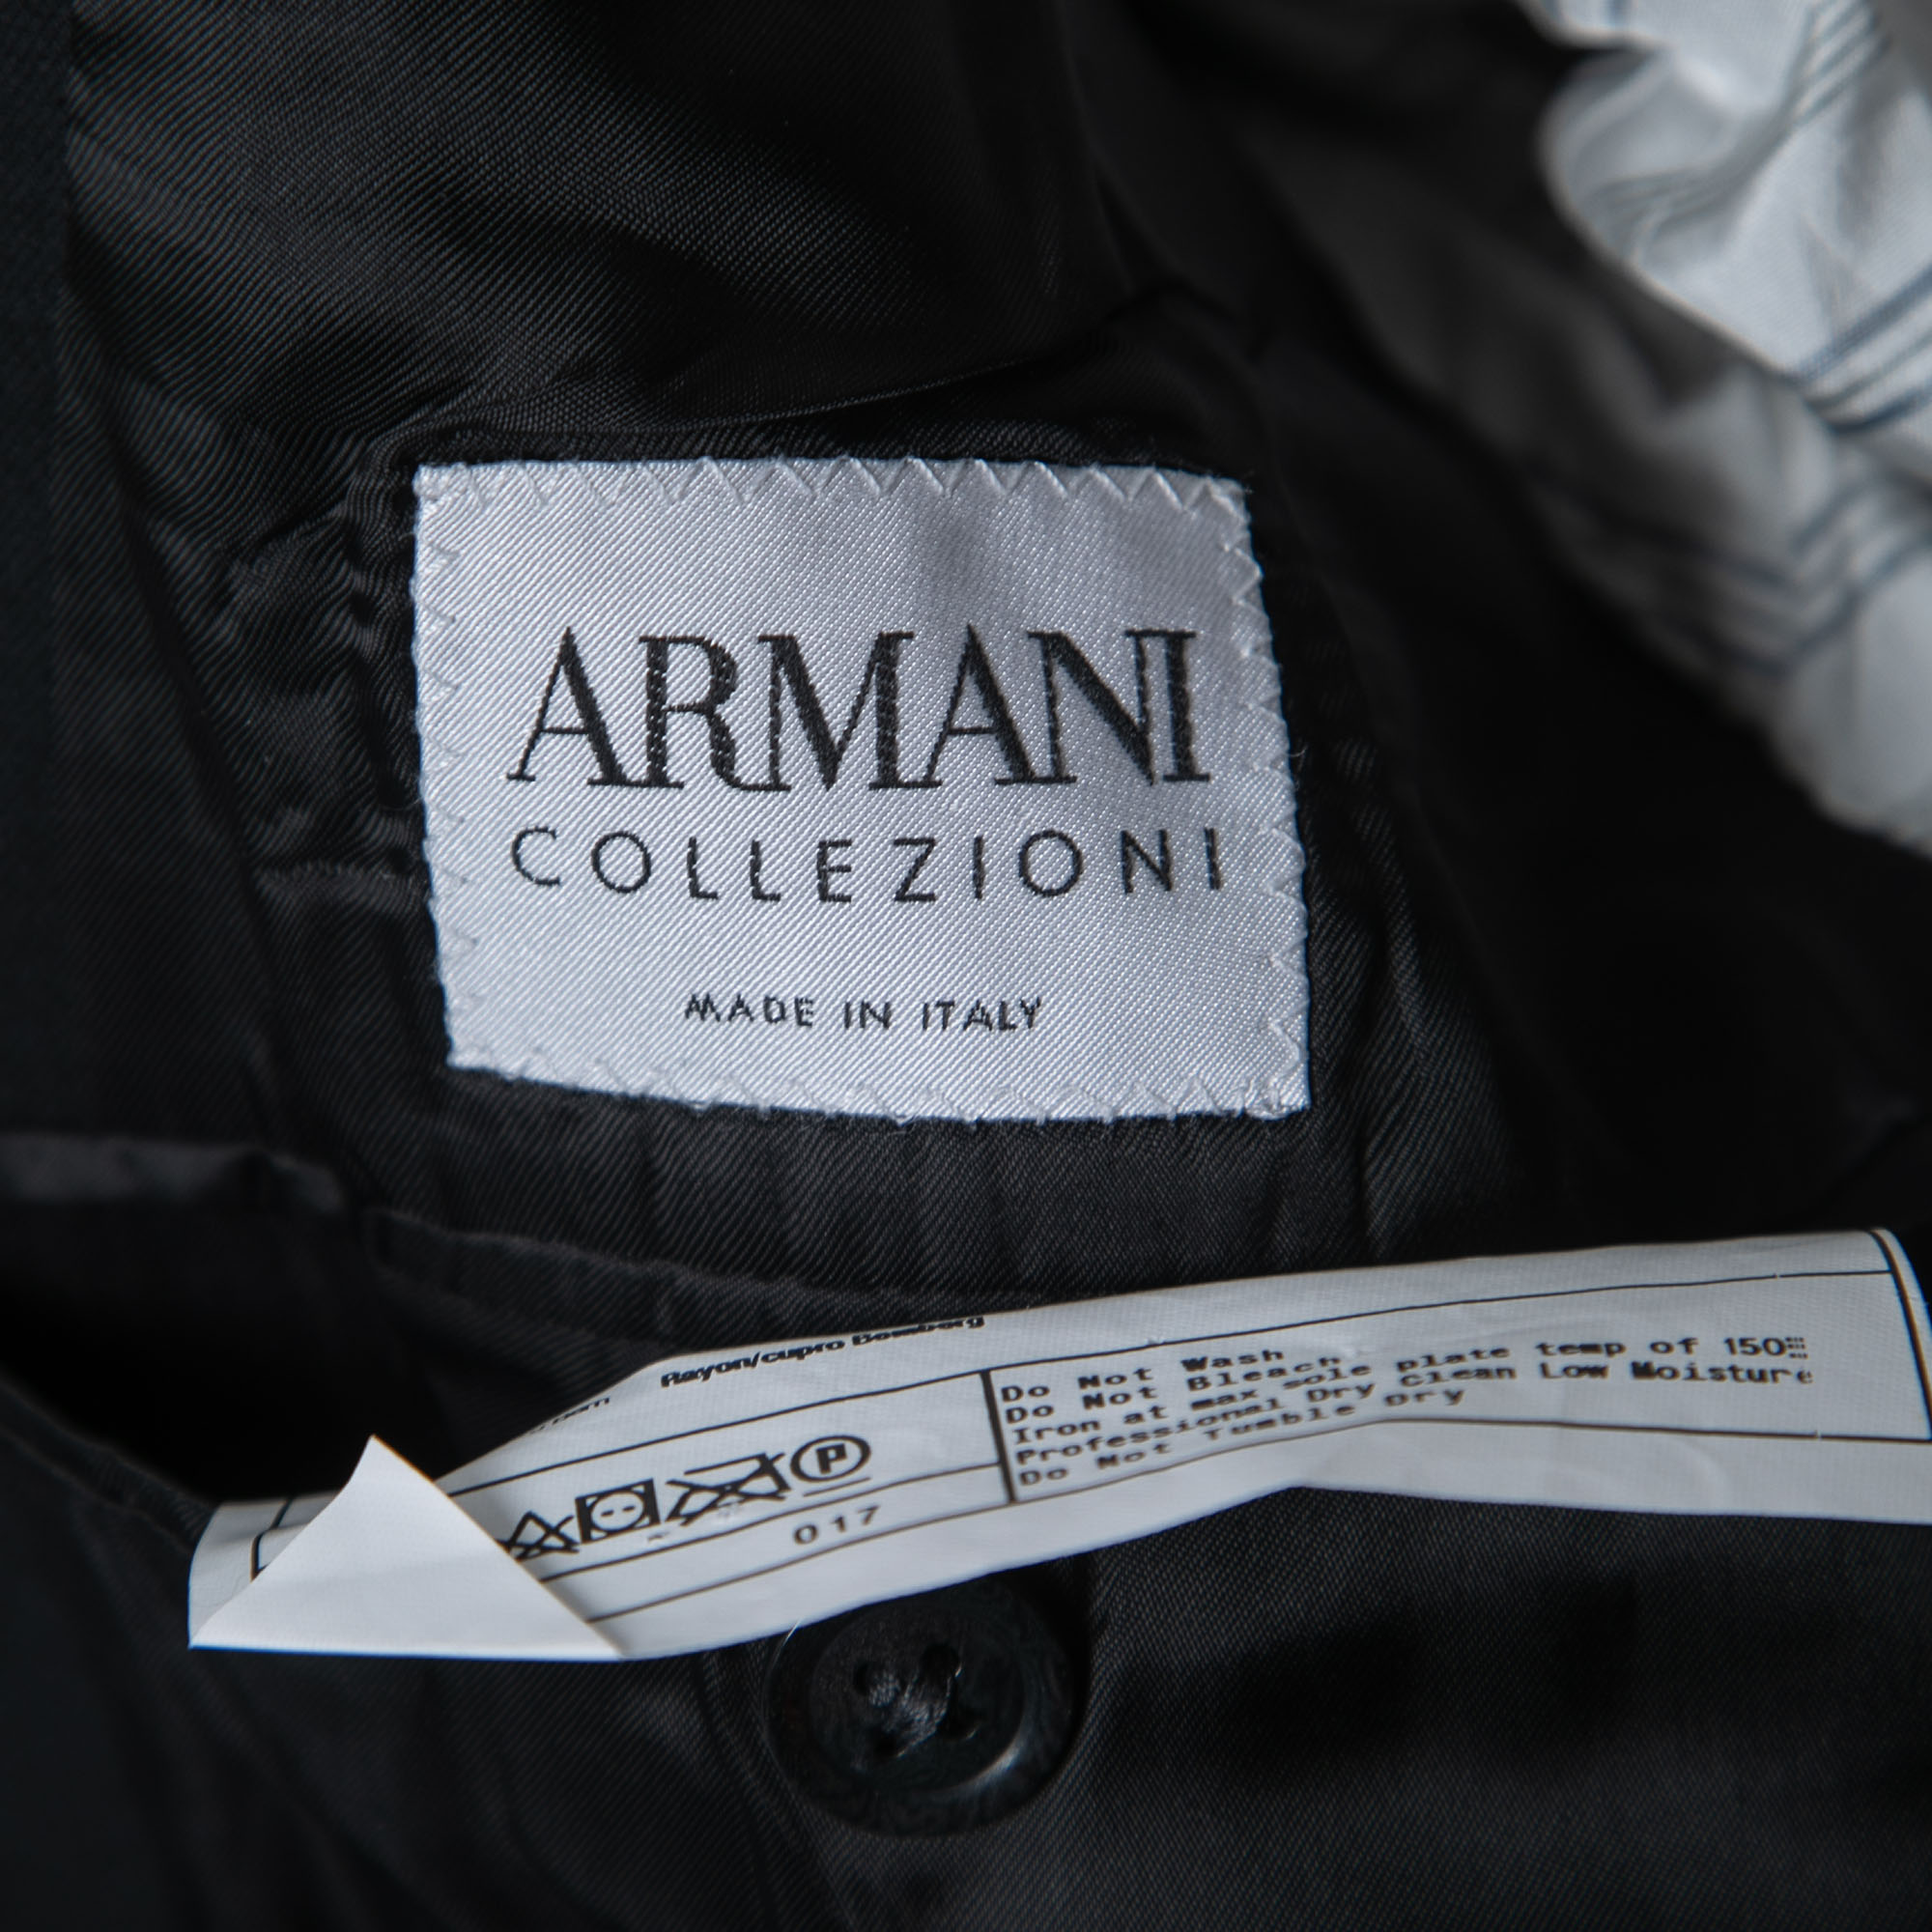 Armani Collezioni Midnight Blue Striped Wool Blend Single-Breasted Blazer XL